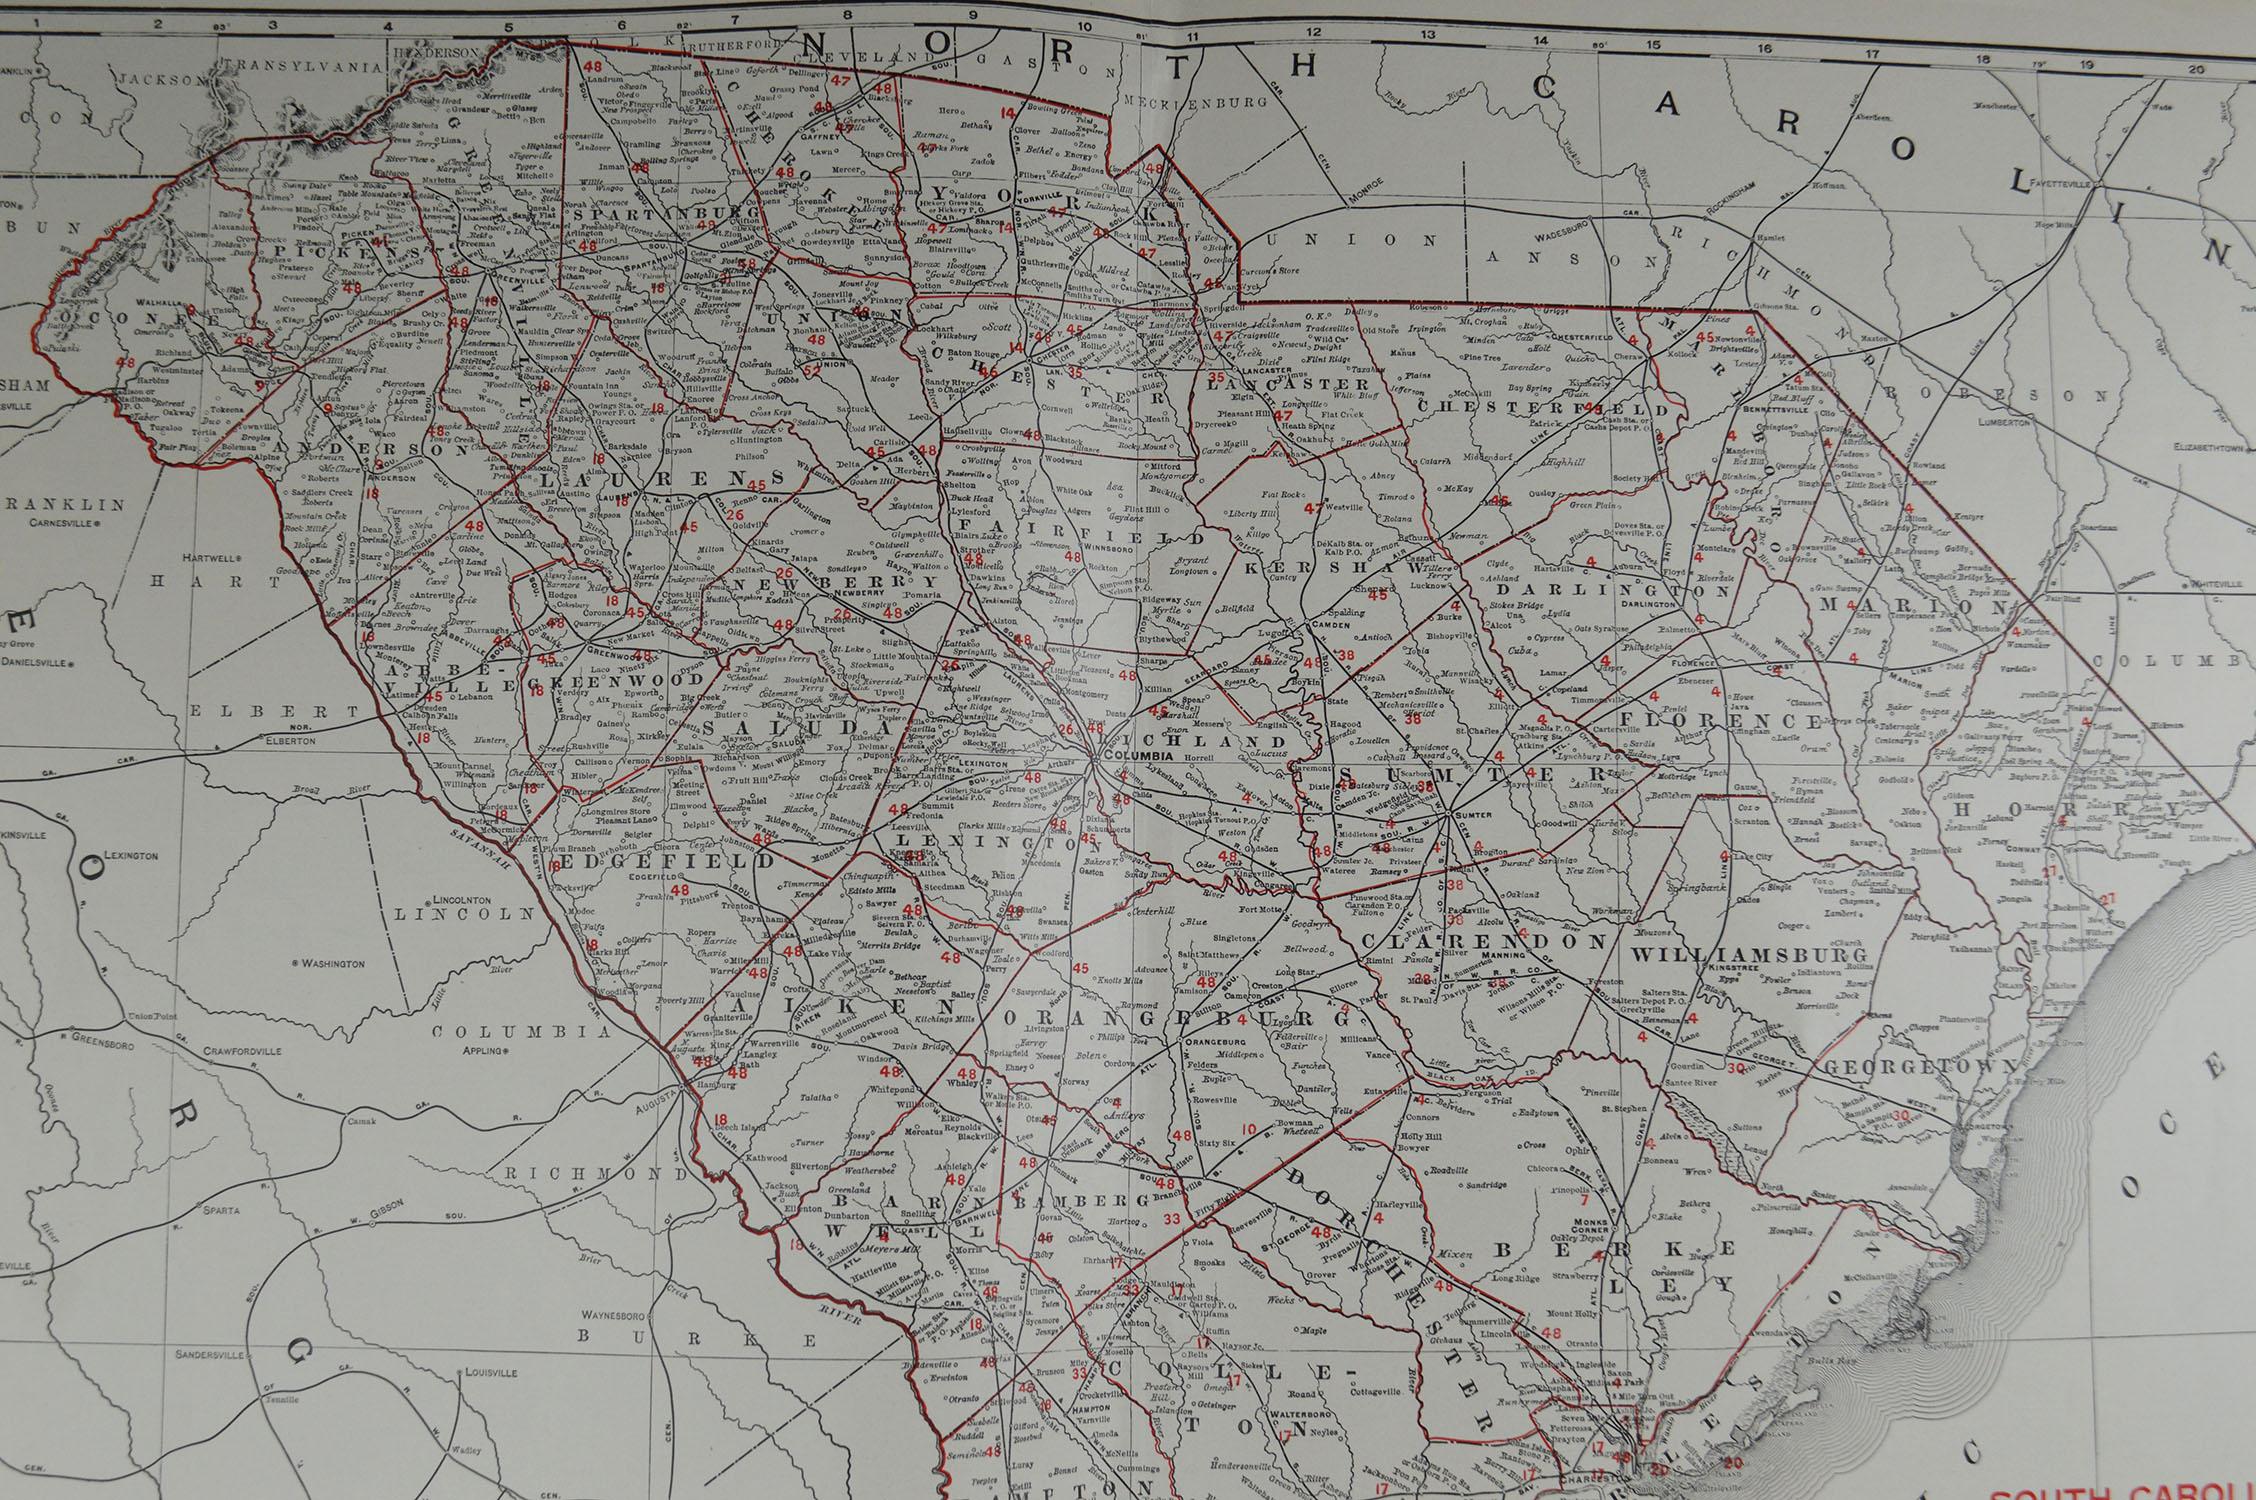 American Large Original Antique Map of South Carolina by Rand McNally, circa 1900